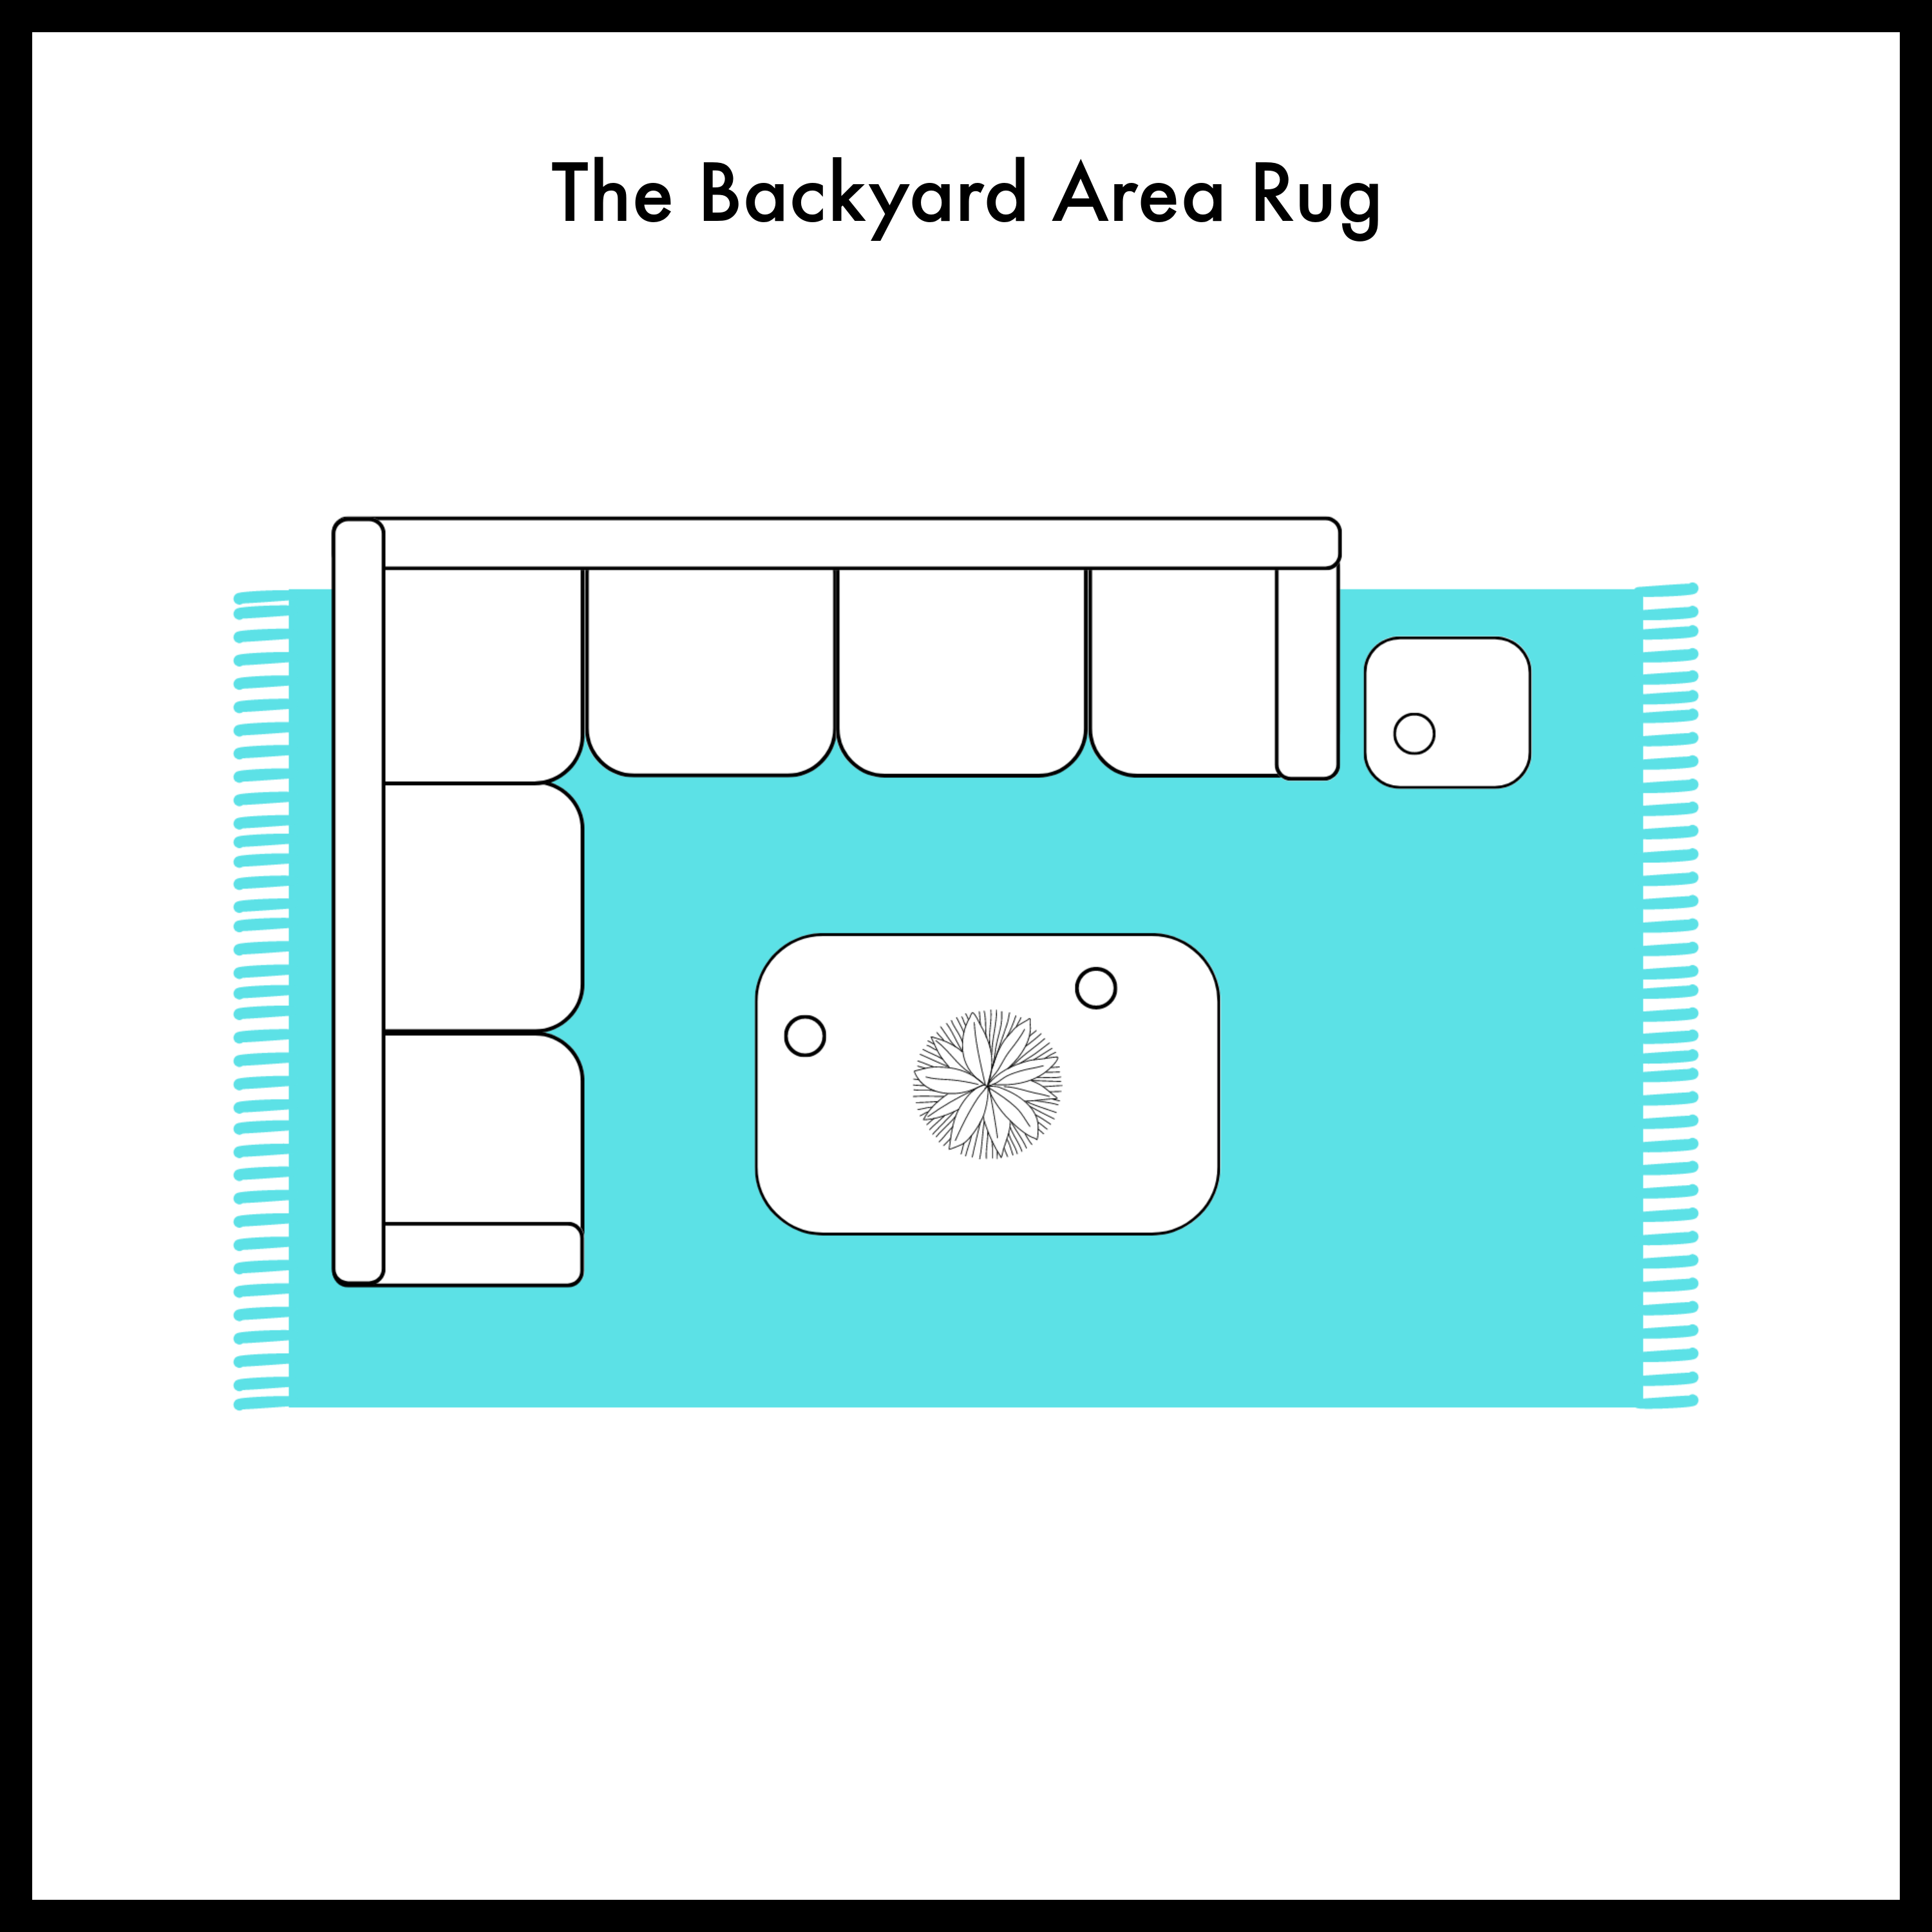 The Backyard Area Rug